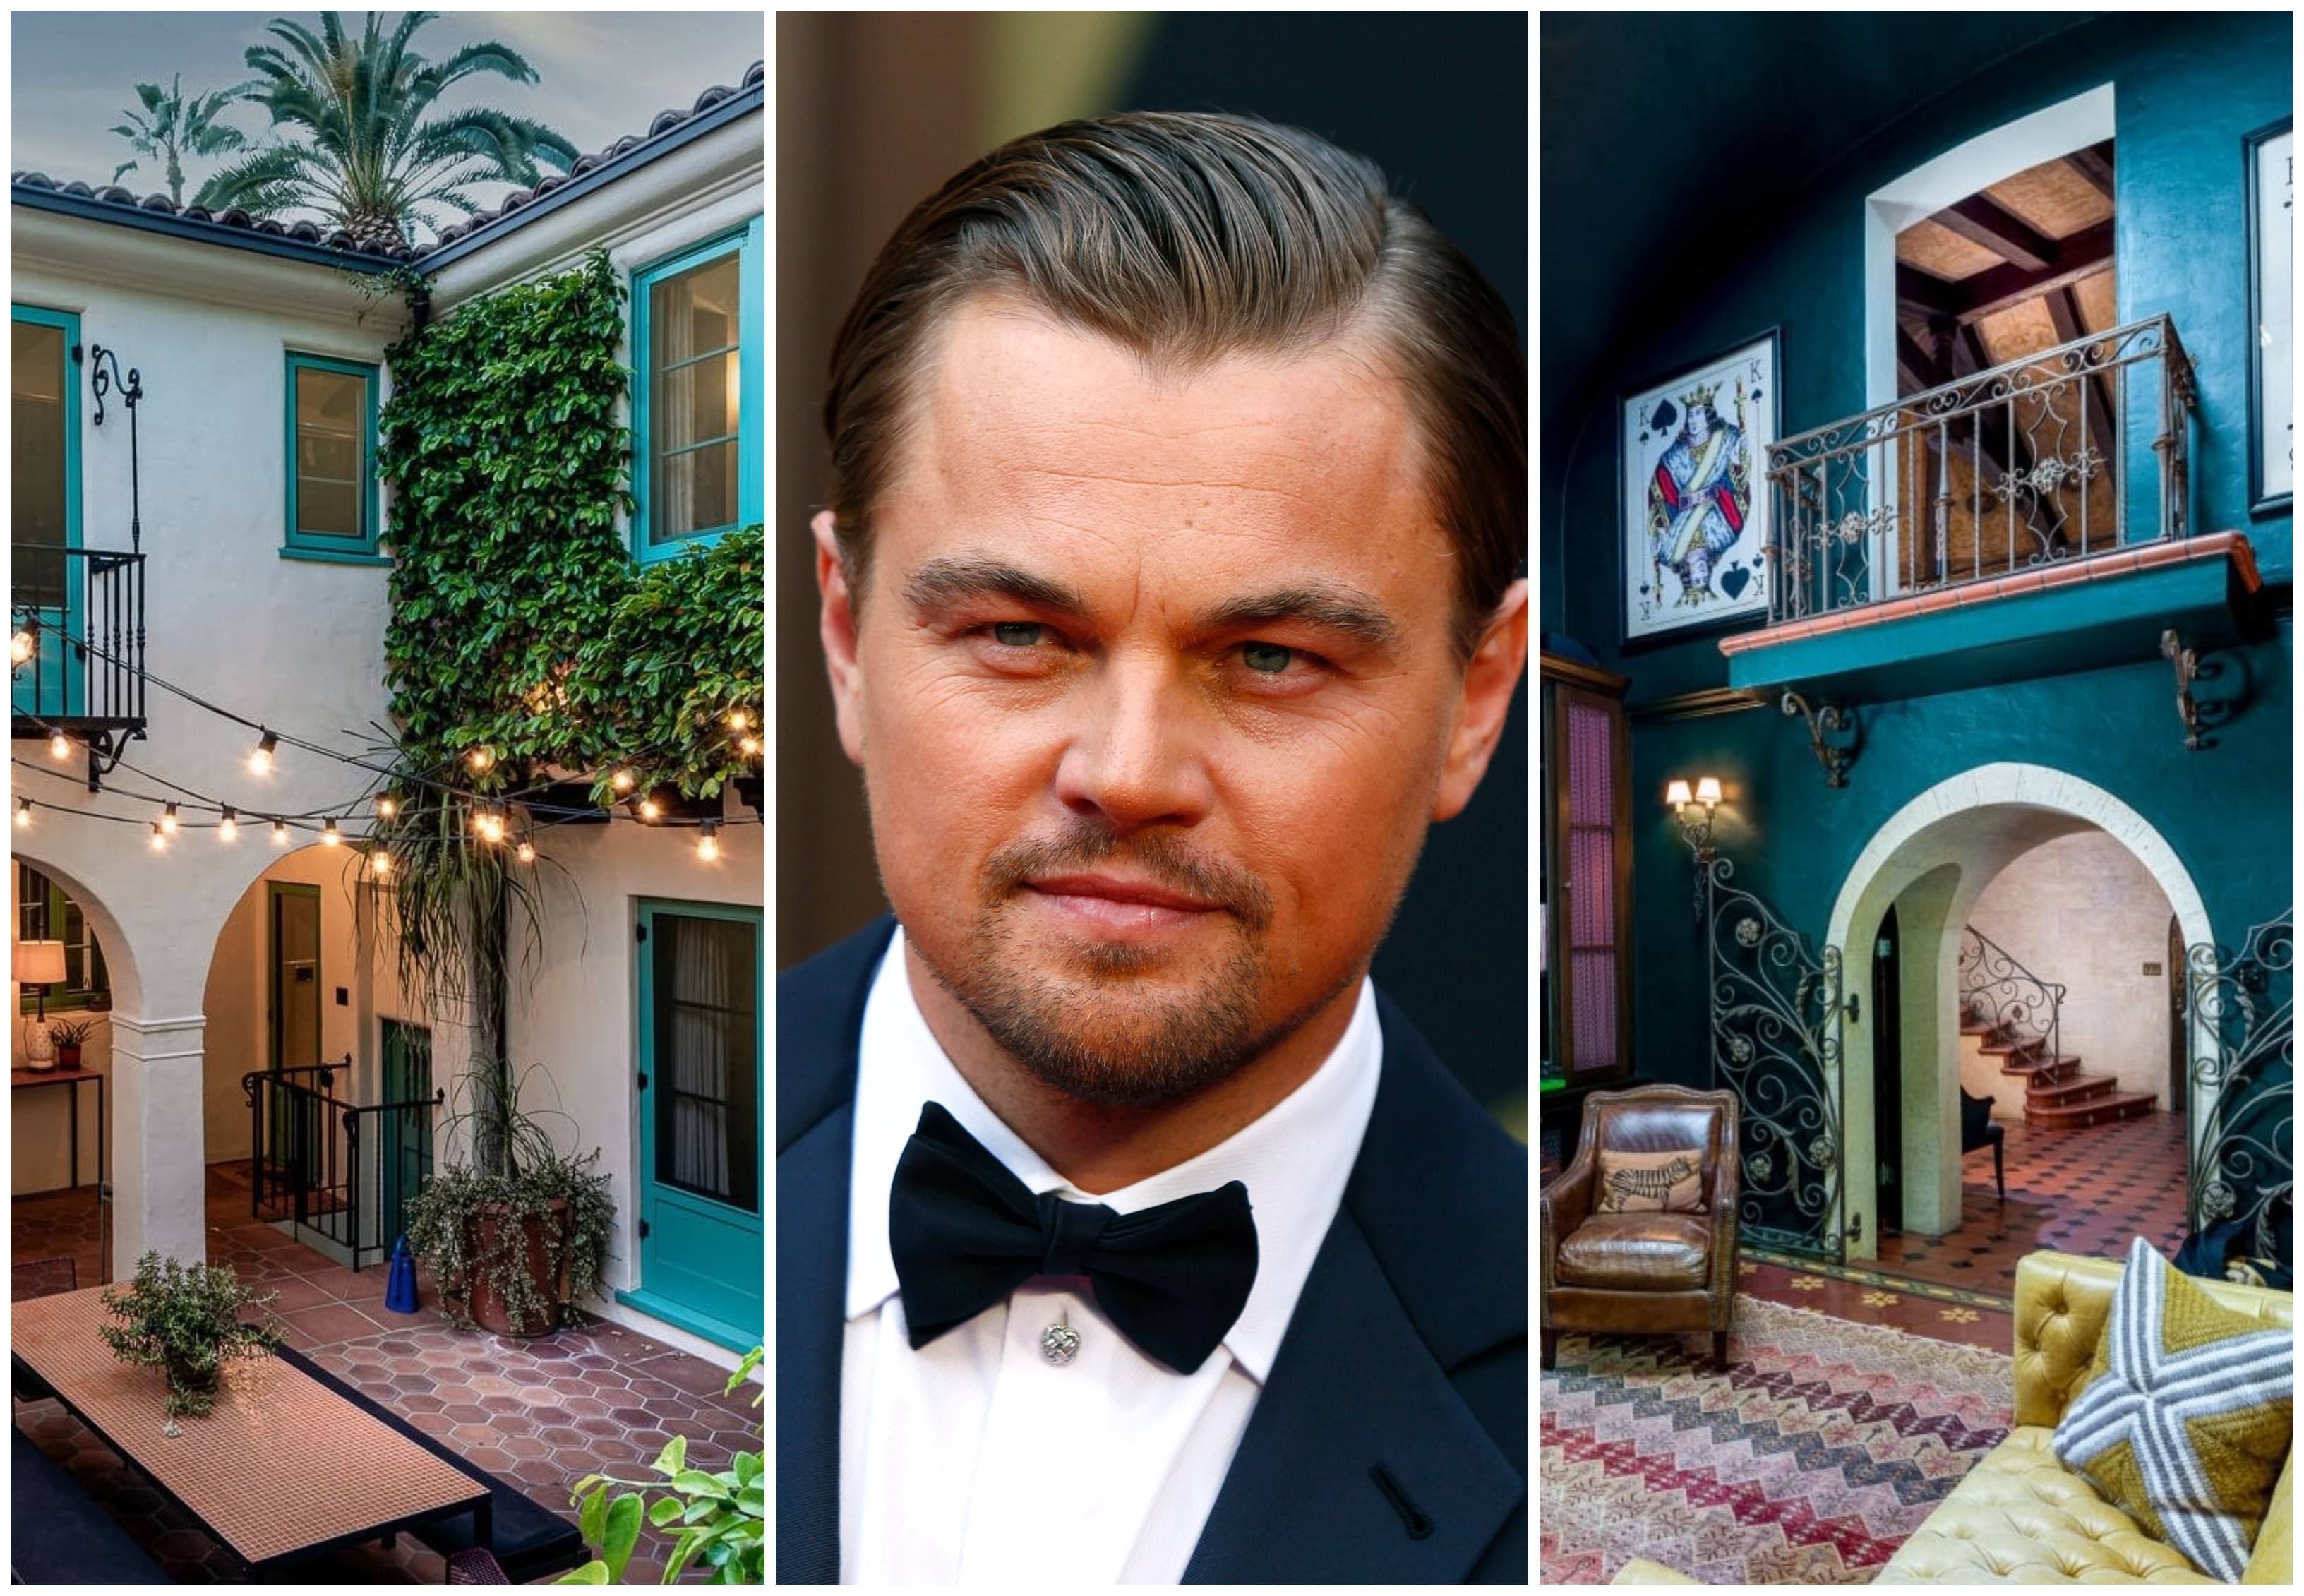 Leonardo DiCaprio and his new Los Angeles home (well, his mum’s). Photo: TopTenRealEstateDeals.com